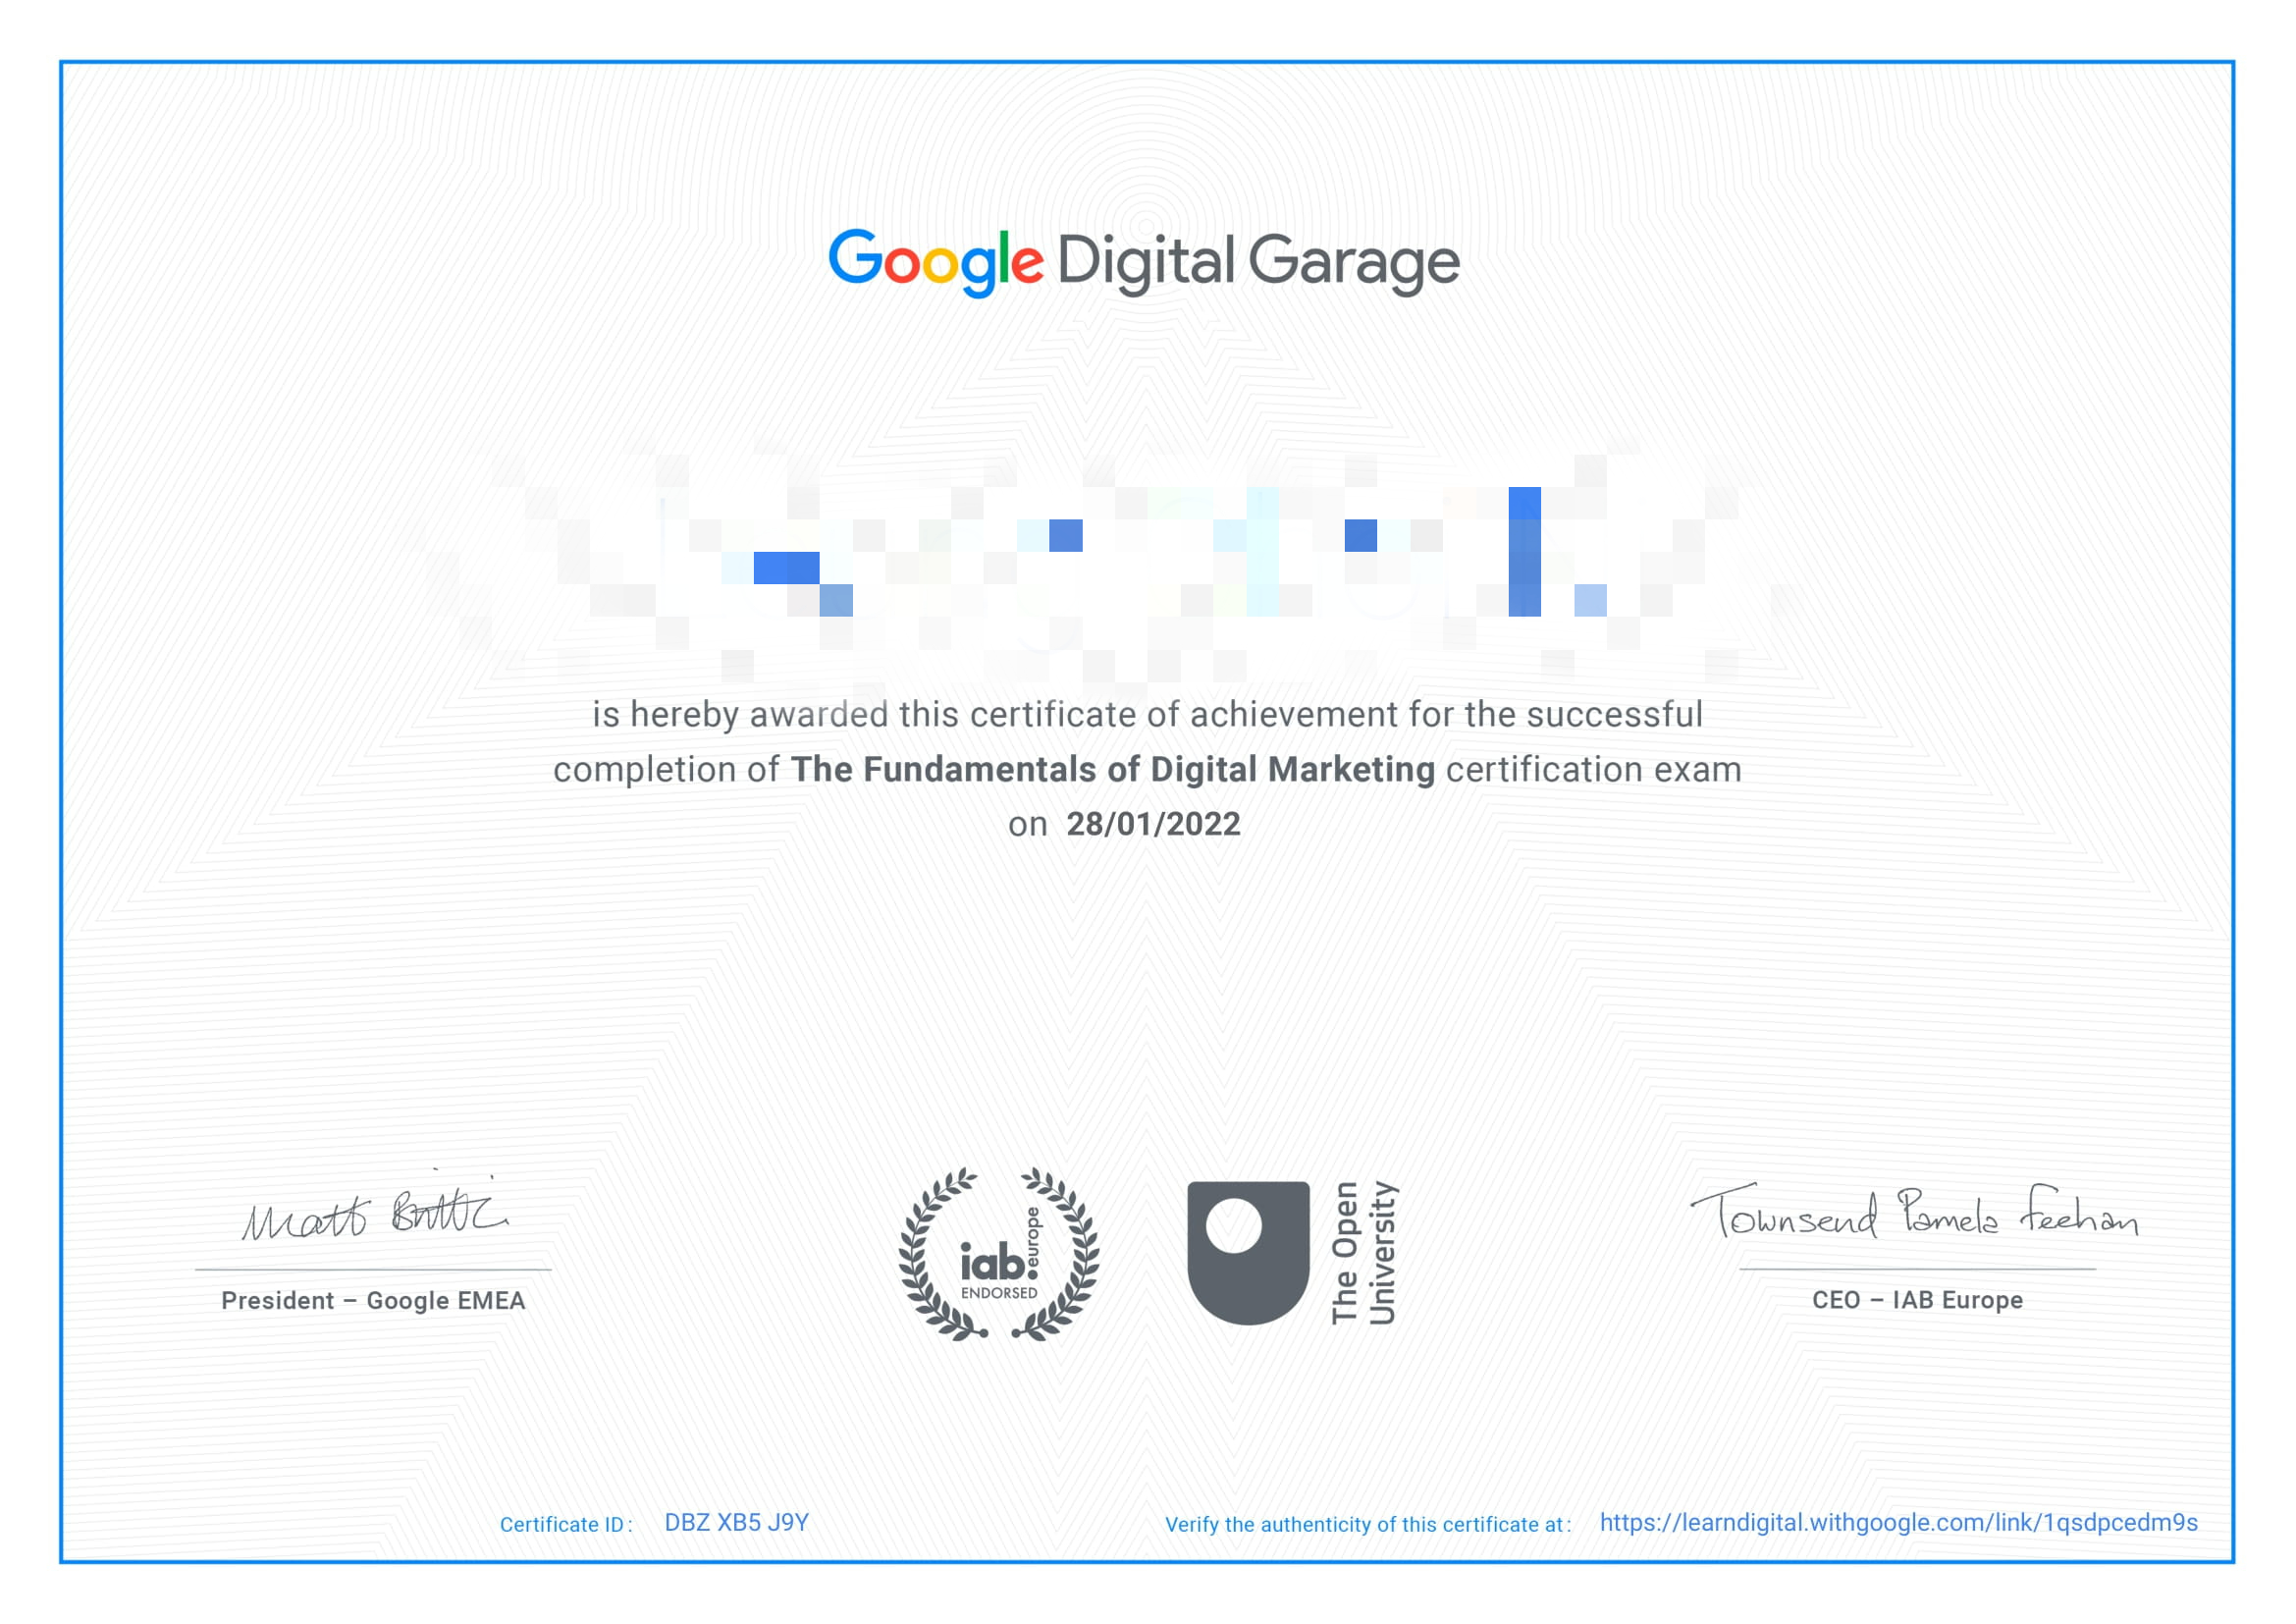 Google The dundamentals of Digital Marketing